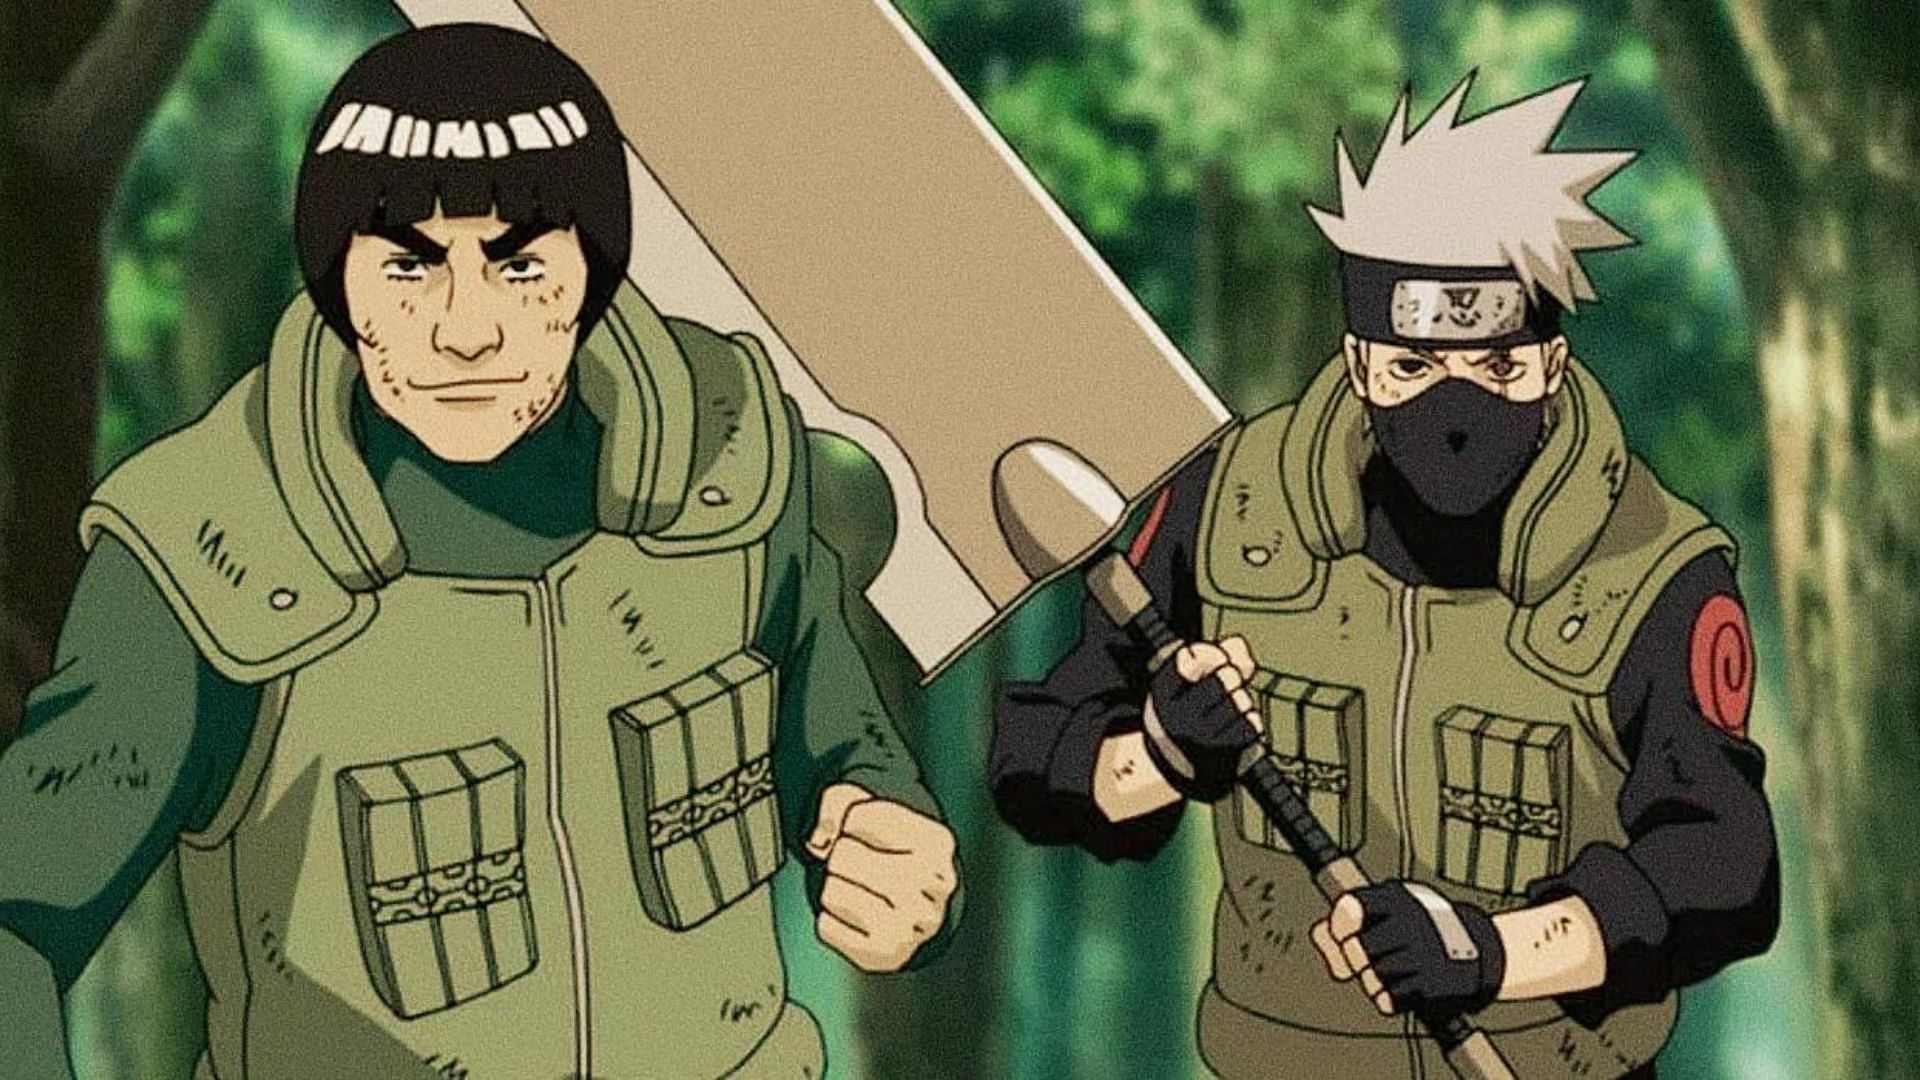 Guy and Kakashi as seen in the Naruto franchise (Image via Studio Pierrot)